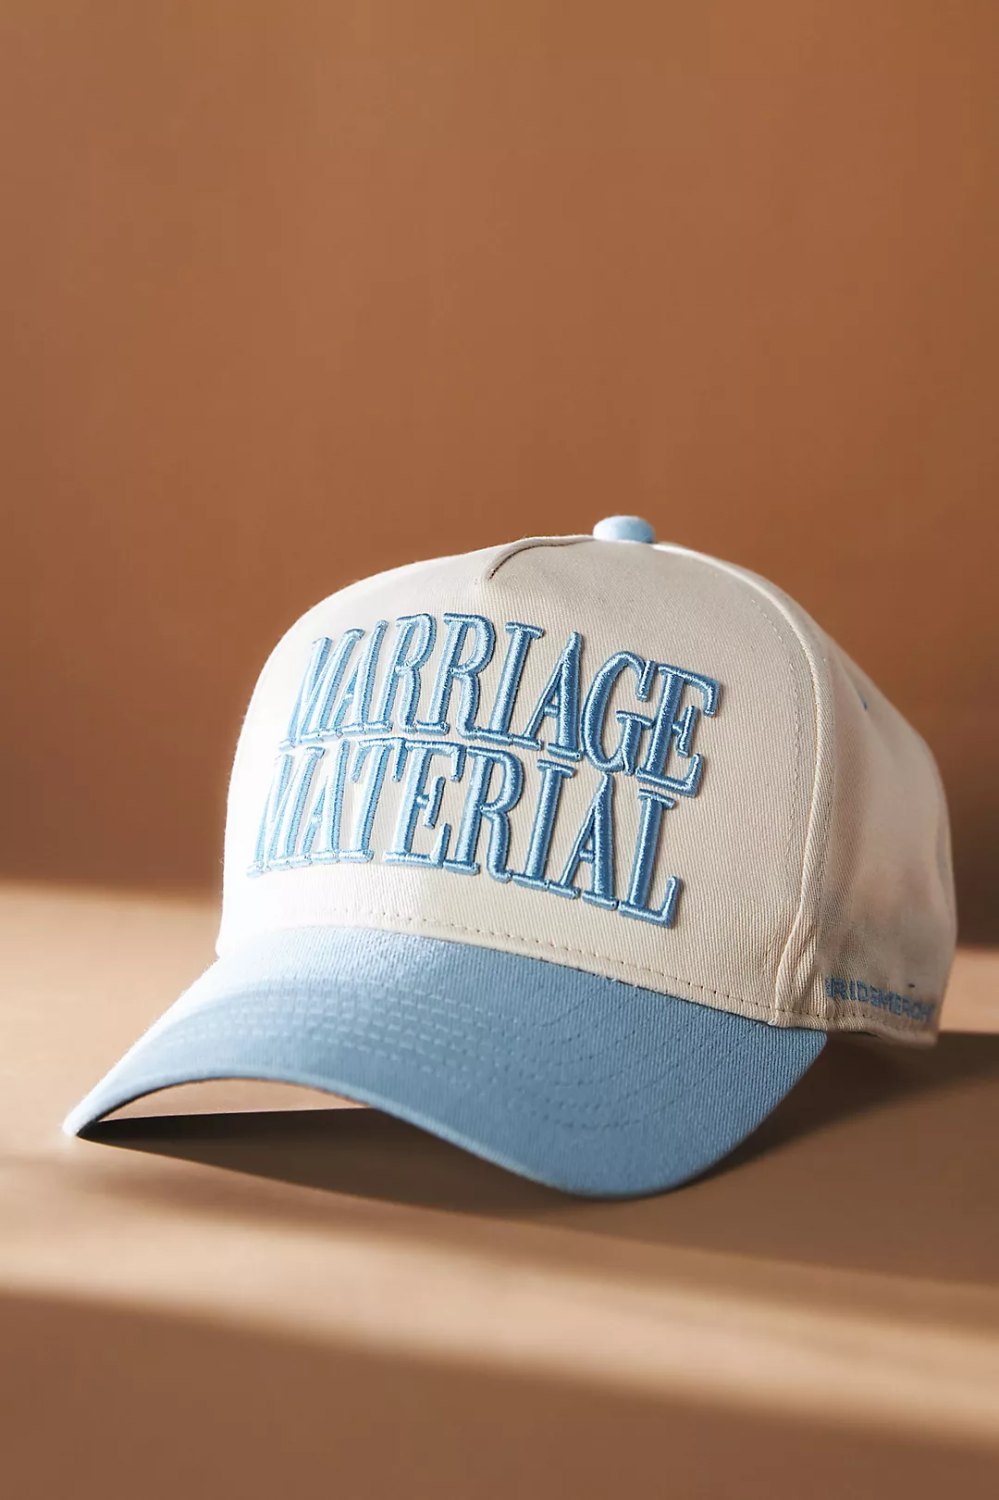 Wedding material baseball cap